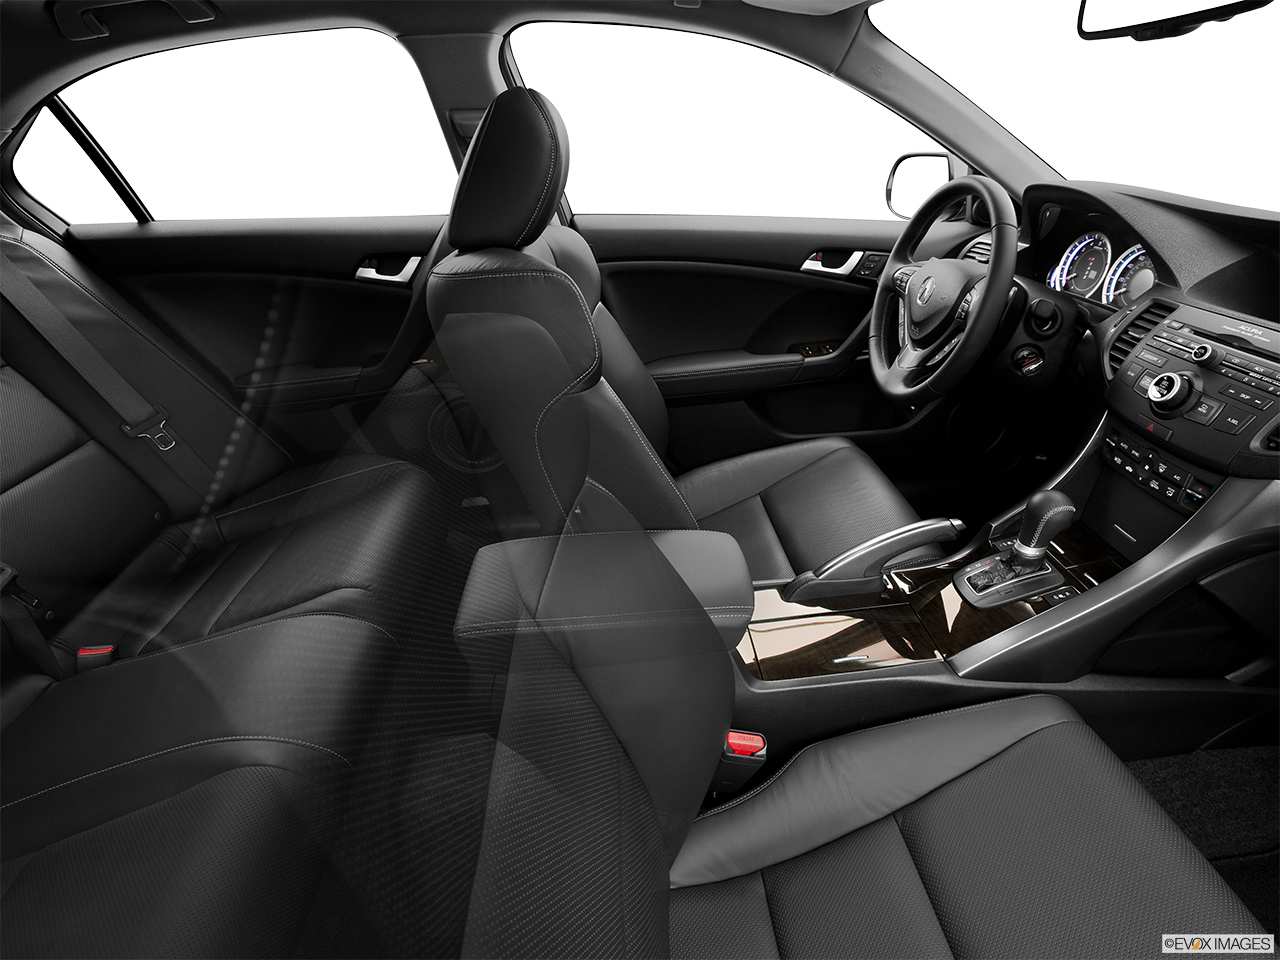 2013 Acura TSX 5-speed Automatic Fake Buck Shot - Interior from Passenger B pillar. 